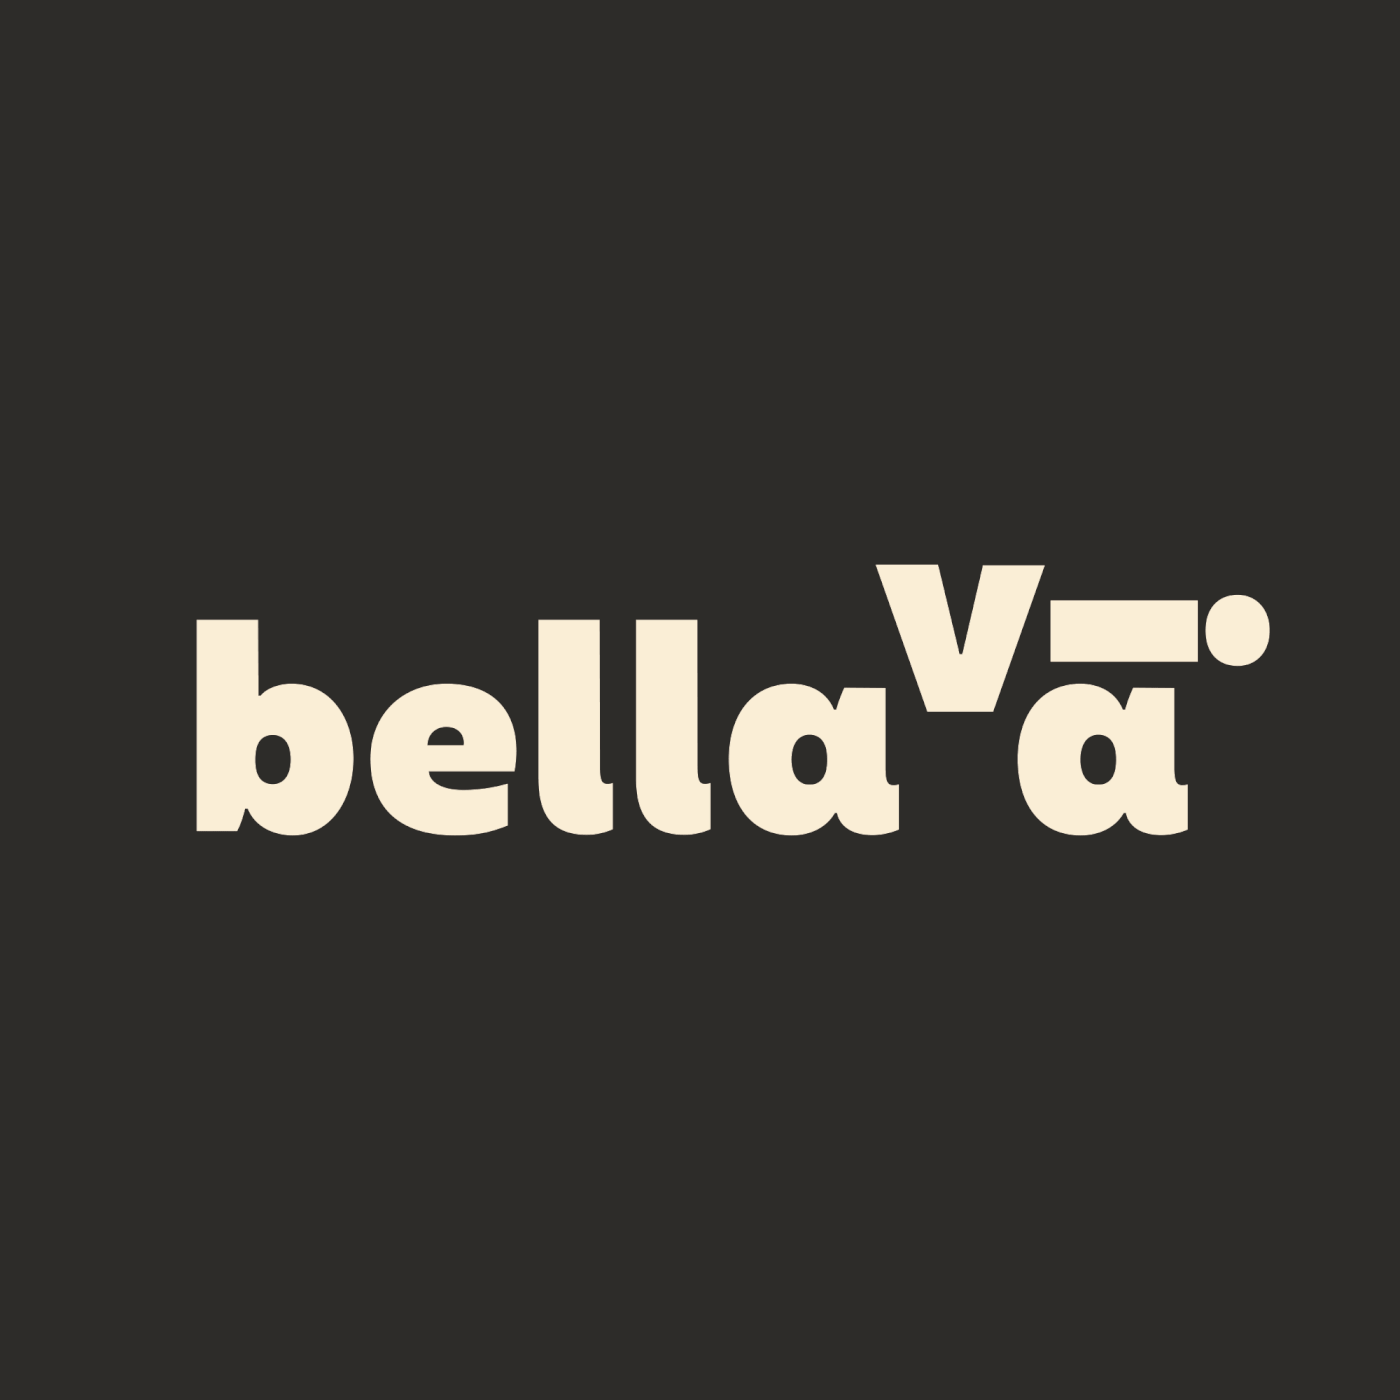 BELLAVIA REBRANDING on Behance